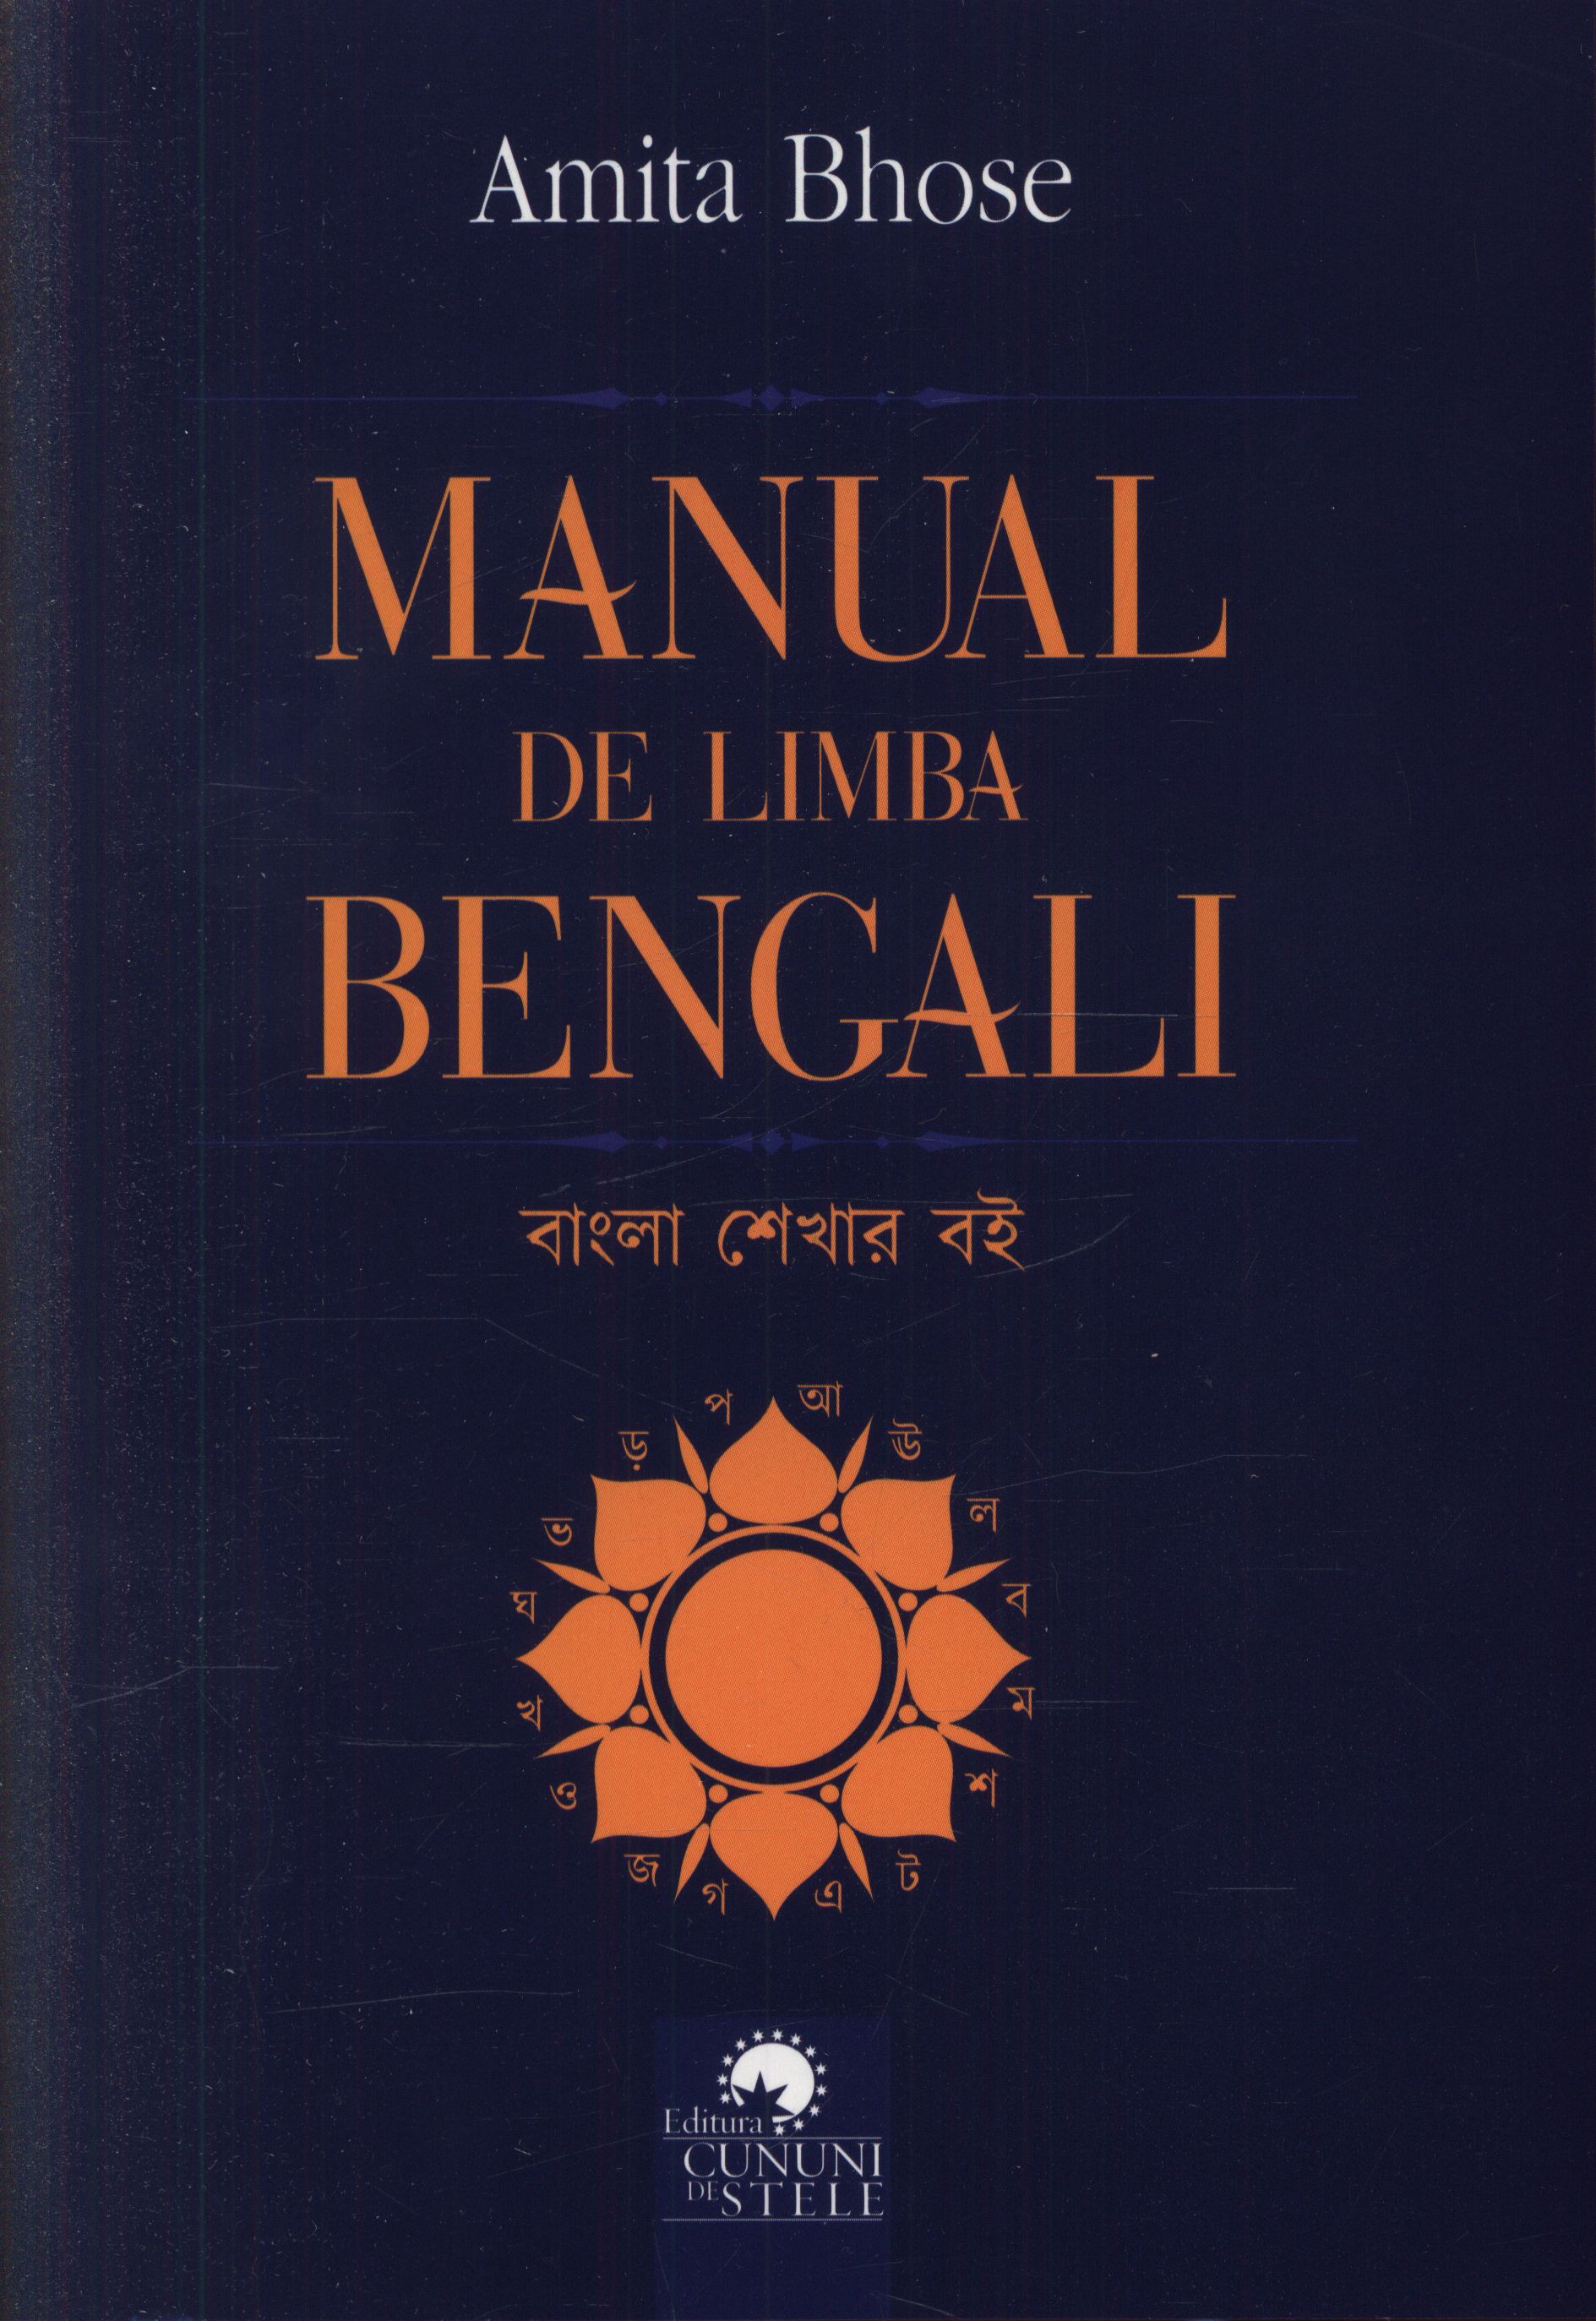 Manual de limba bengali | Amita Bhose carturesti.ro